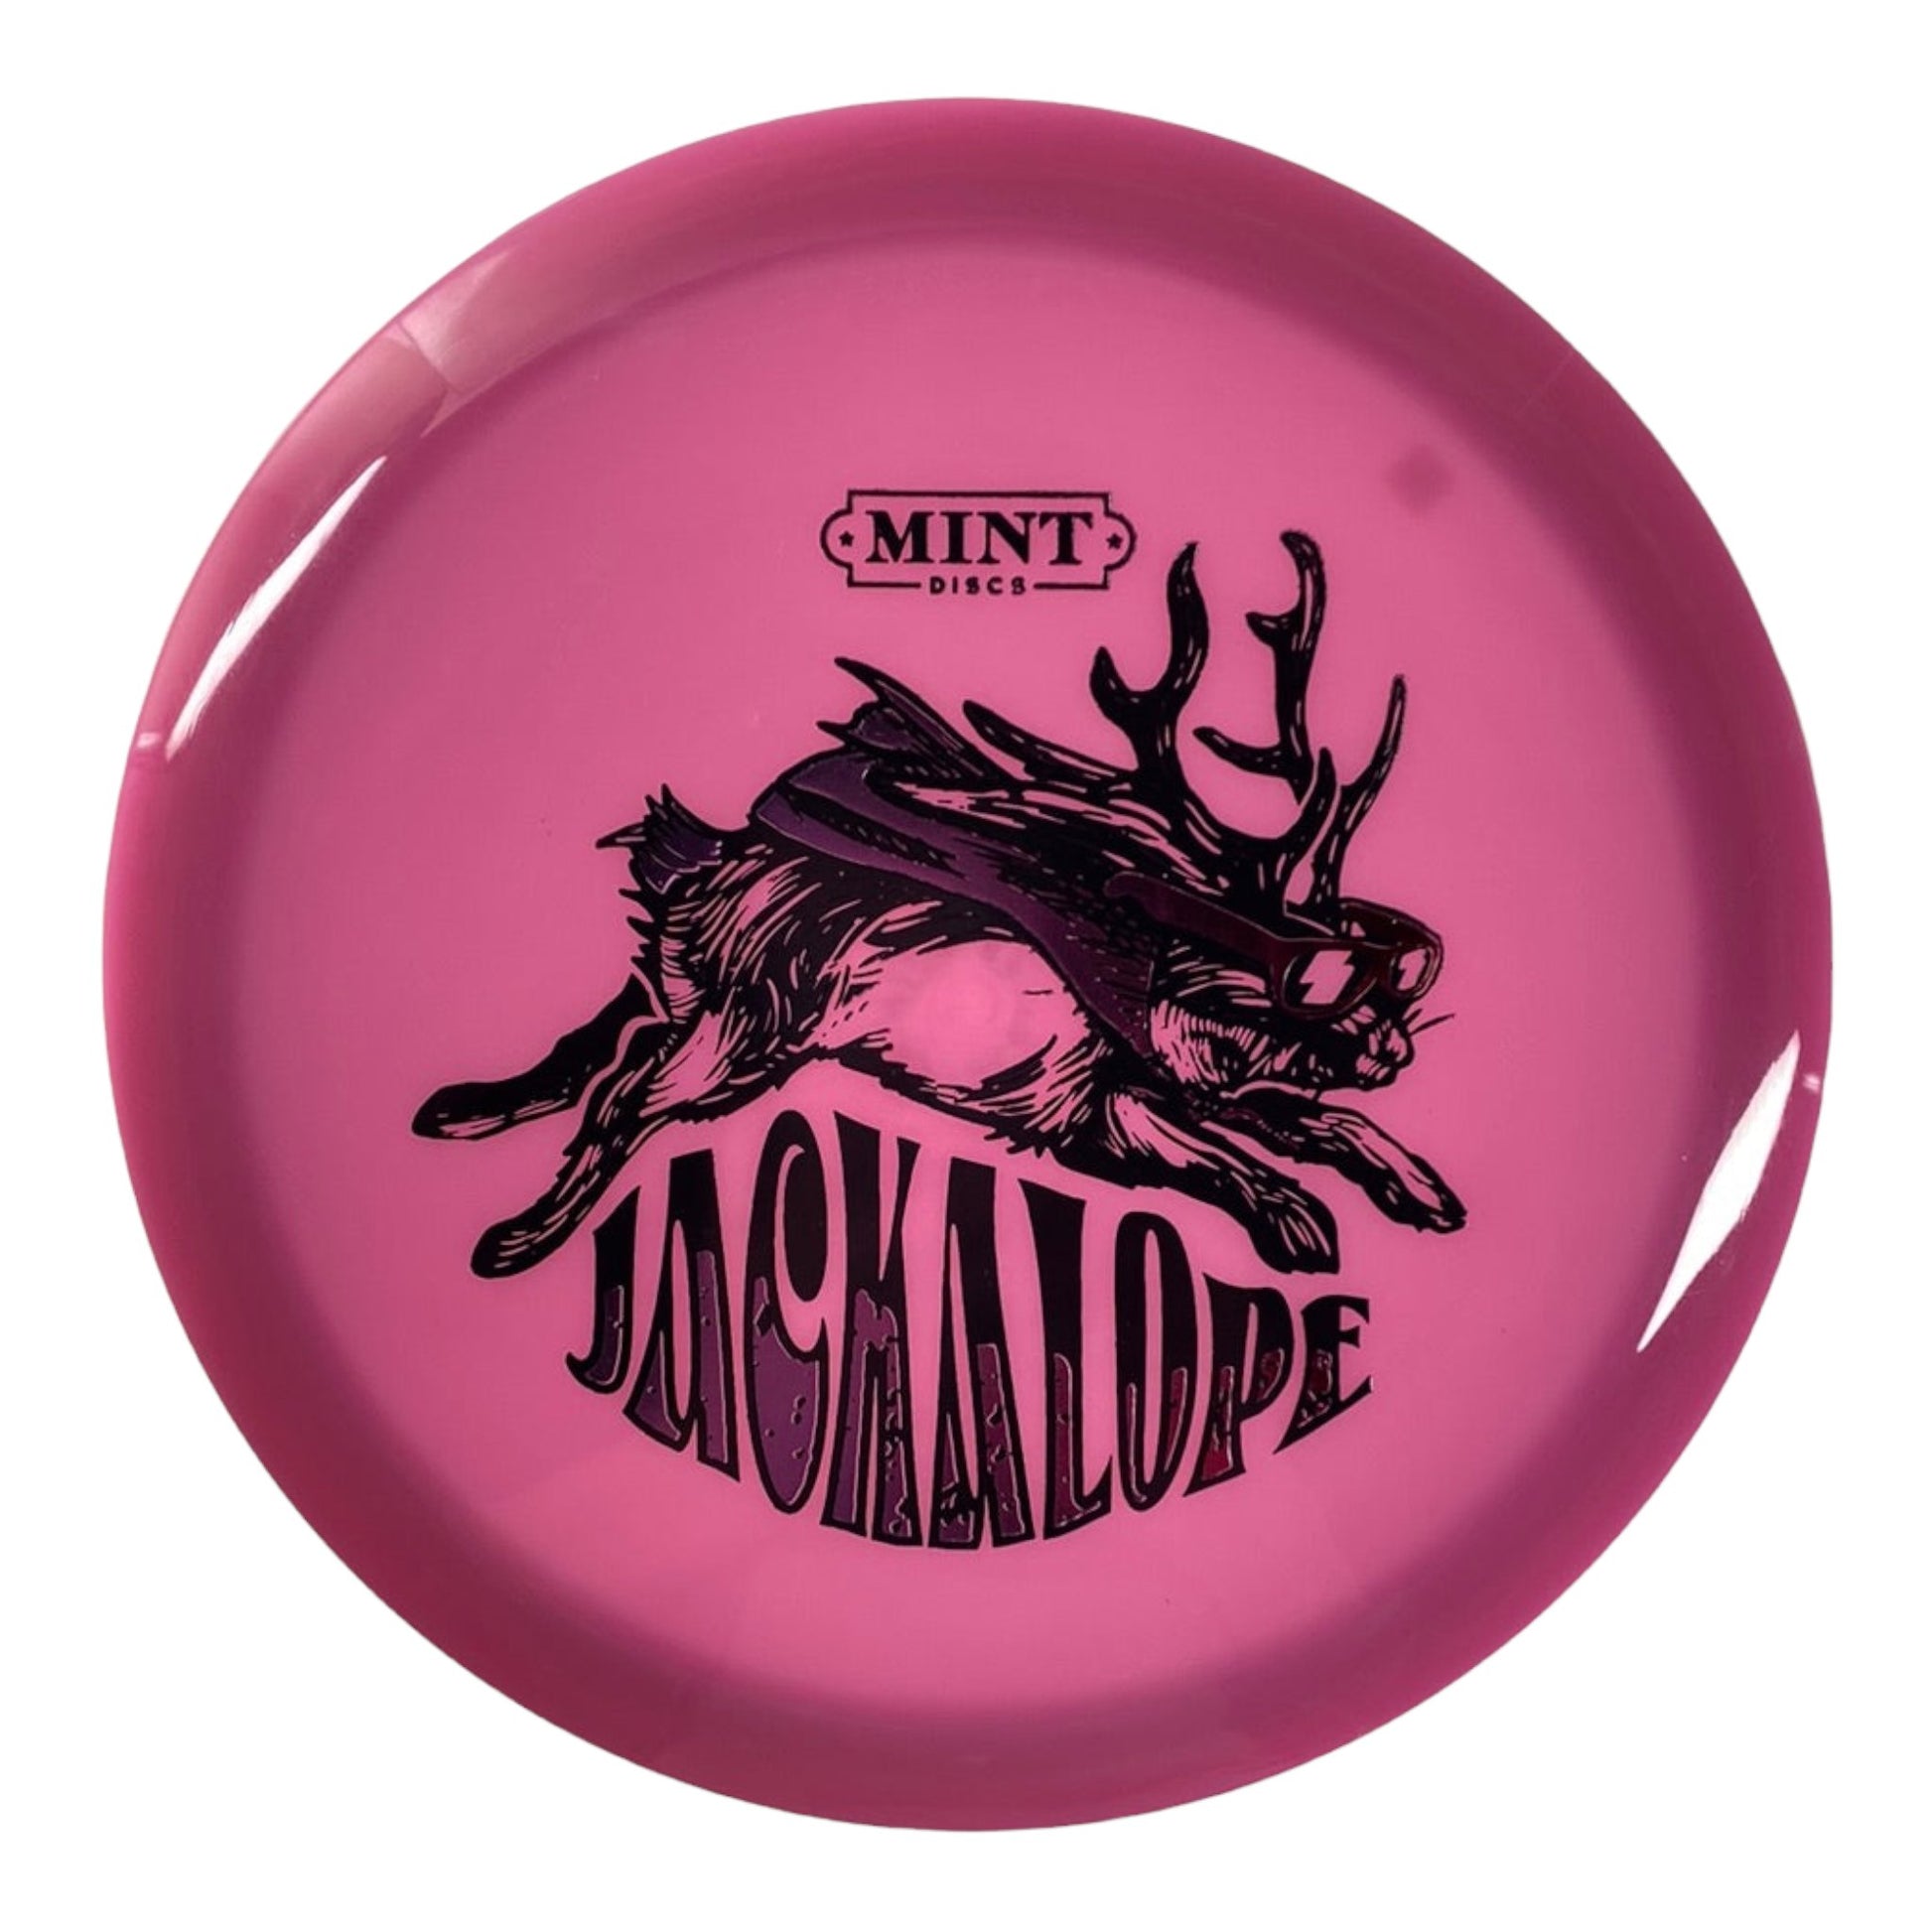 Mint Discs Jackalope | Apex | Pink/Pink 175g Disc Golf